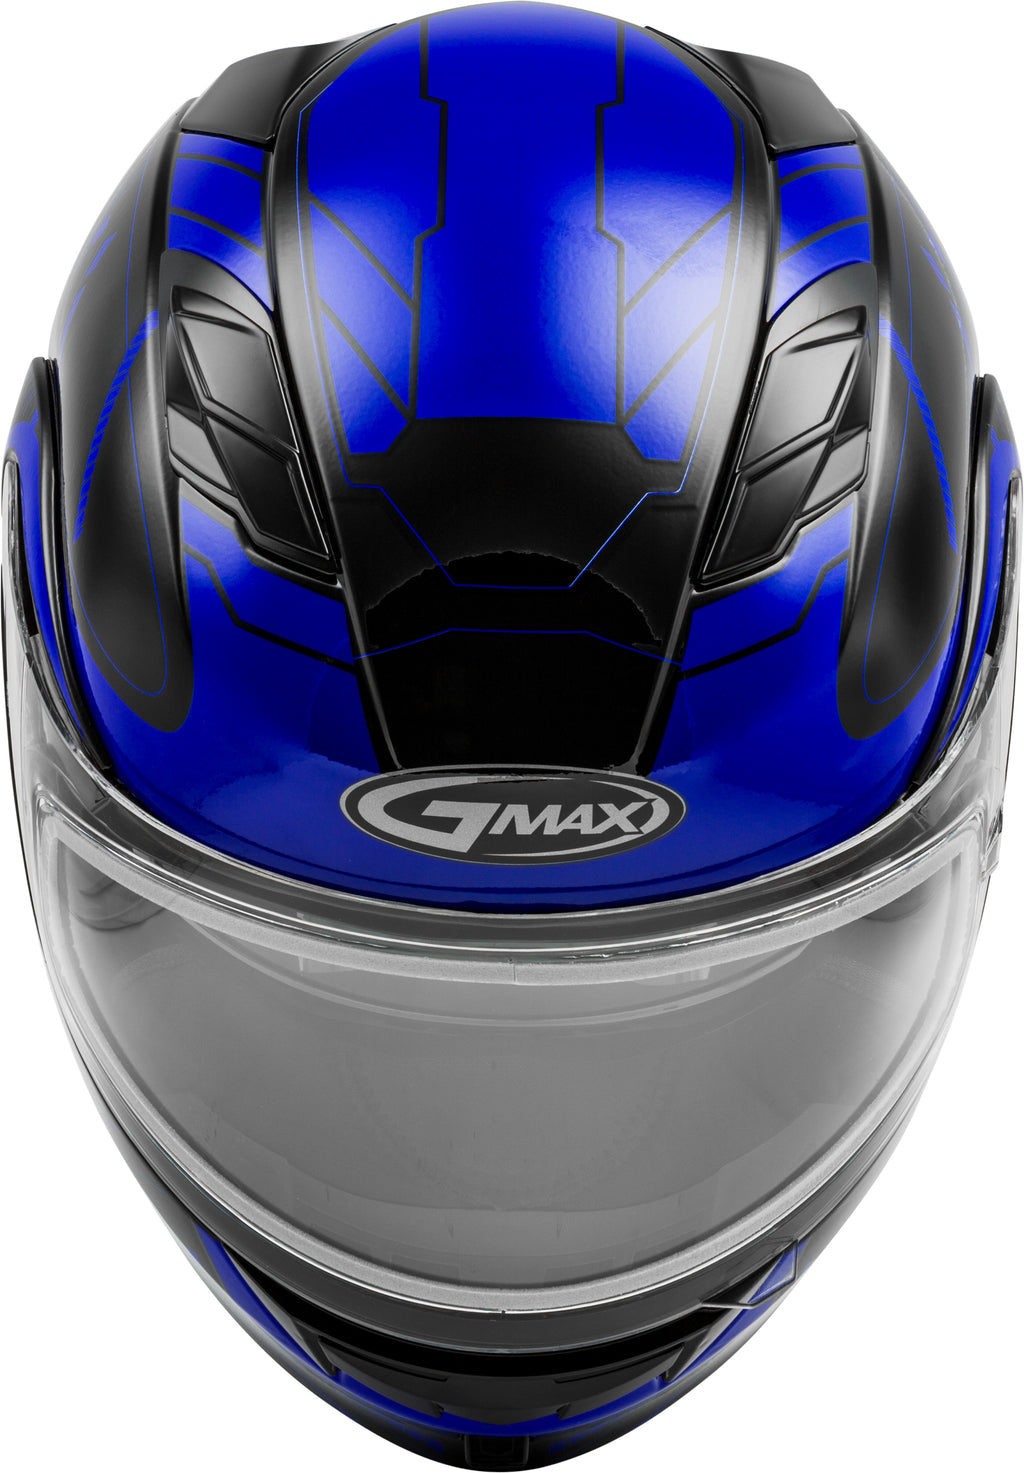 Md 01s Modular Wired Snow Helmet Black/Blue Md